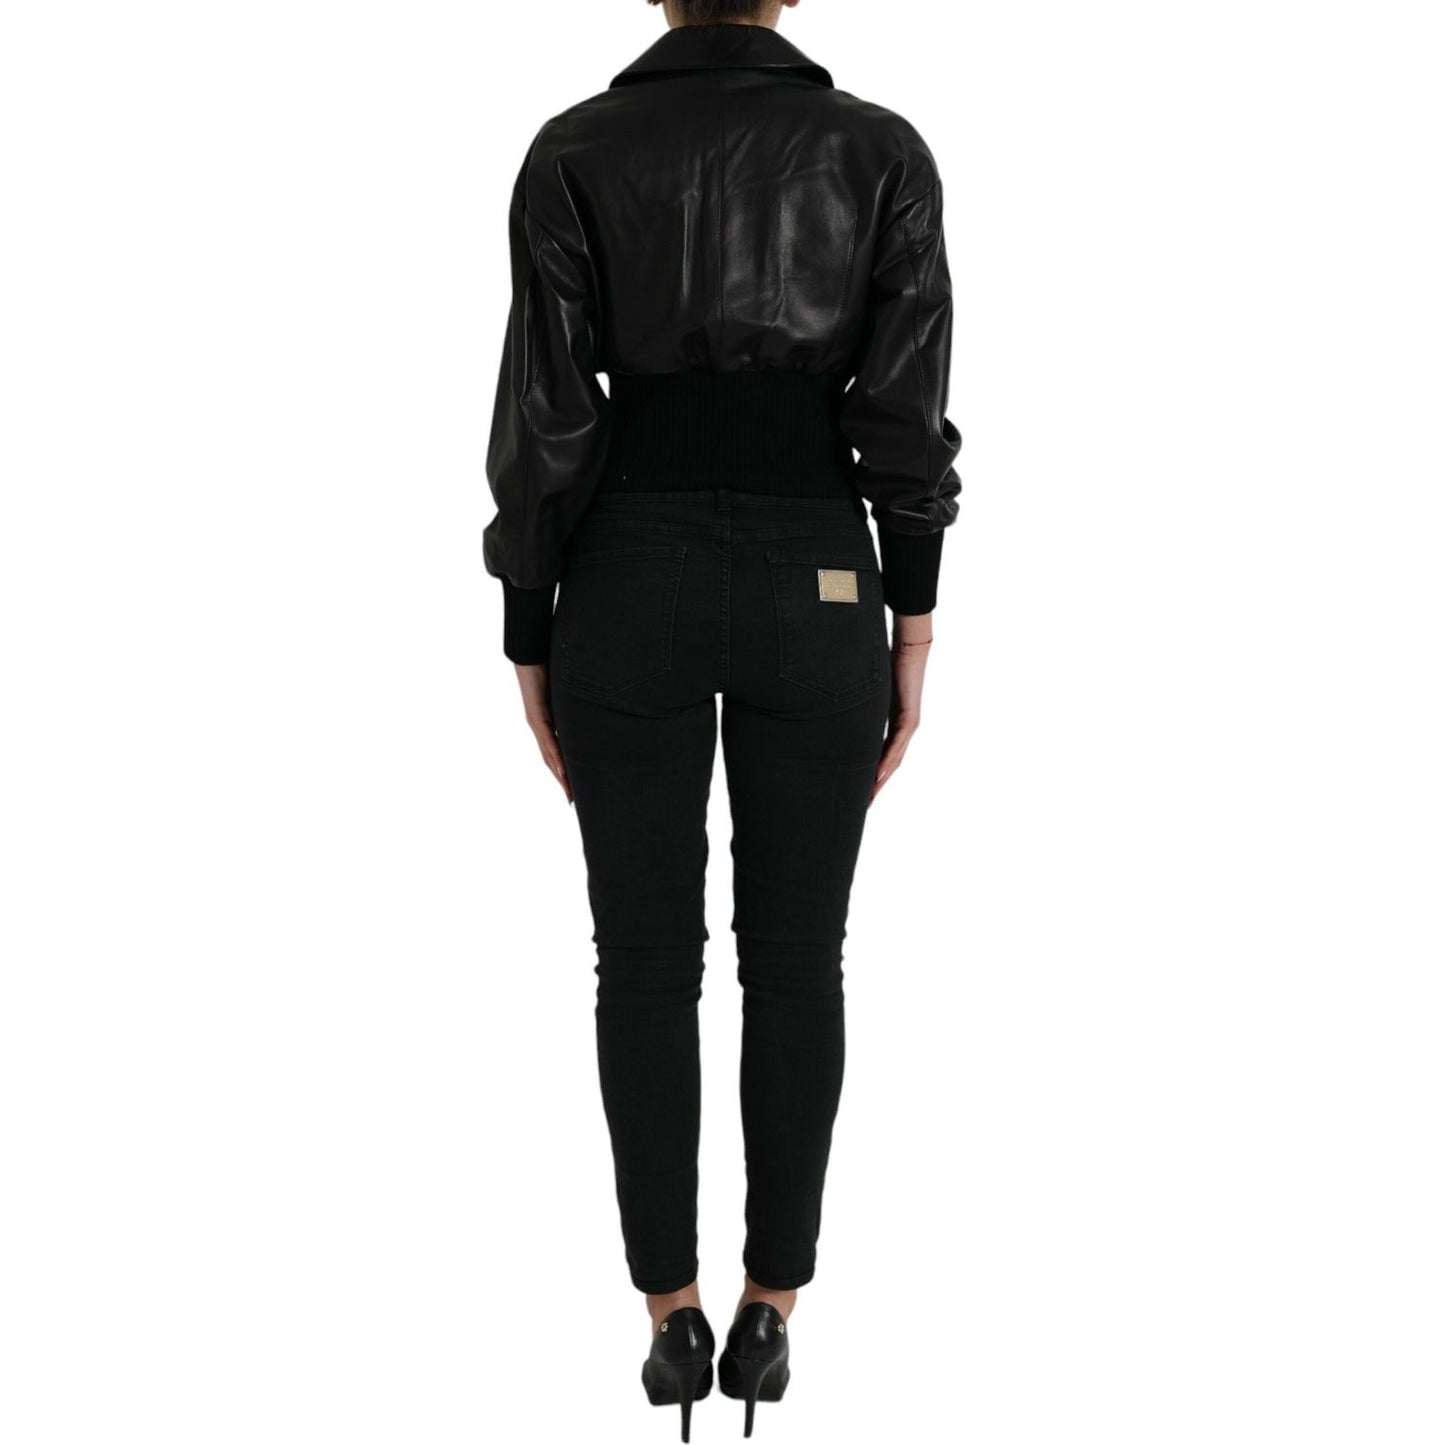 Dolce & Gabbana Elegant Black Leather Blouson Jacket elegant-black-leather-blouson-jacket